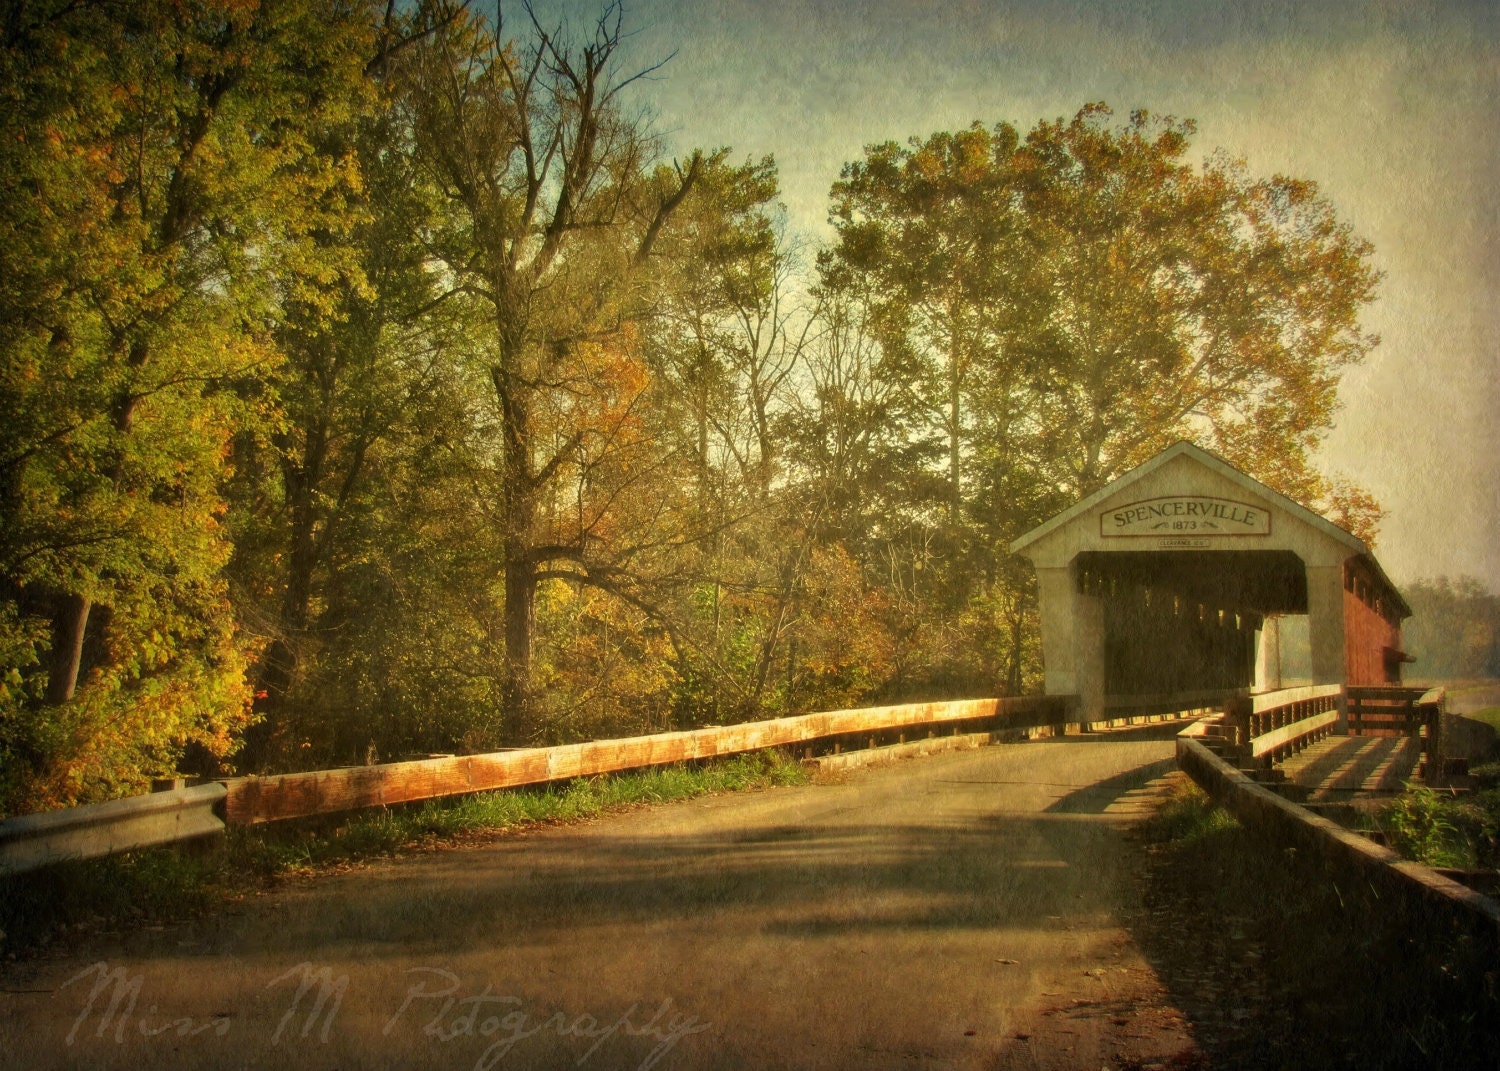 Covered bridge, fall, autum, rustic, farmhouse, country, home decor, original fine art photograph, 5x7 print, metallic finish - MissMPhotography